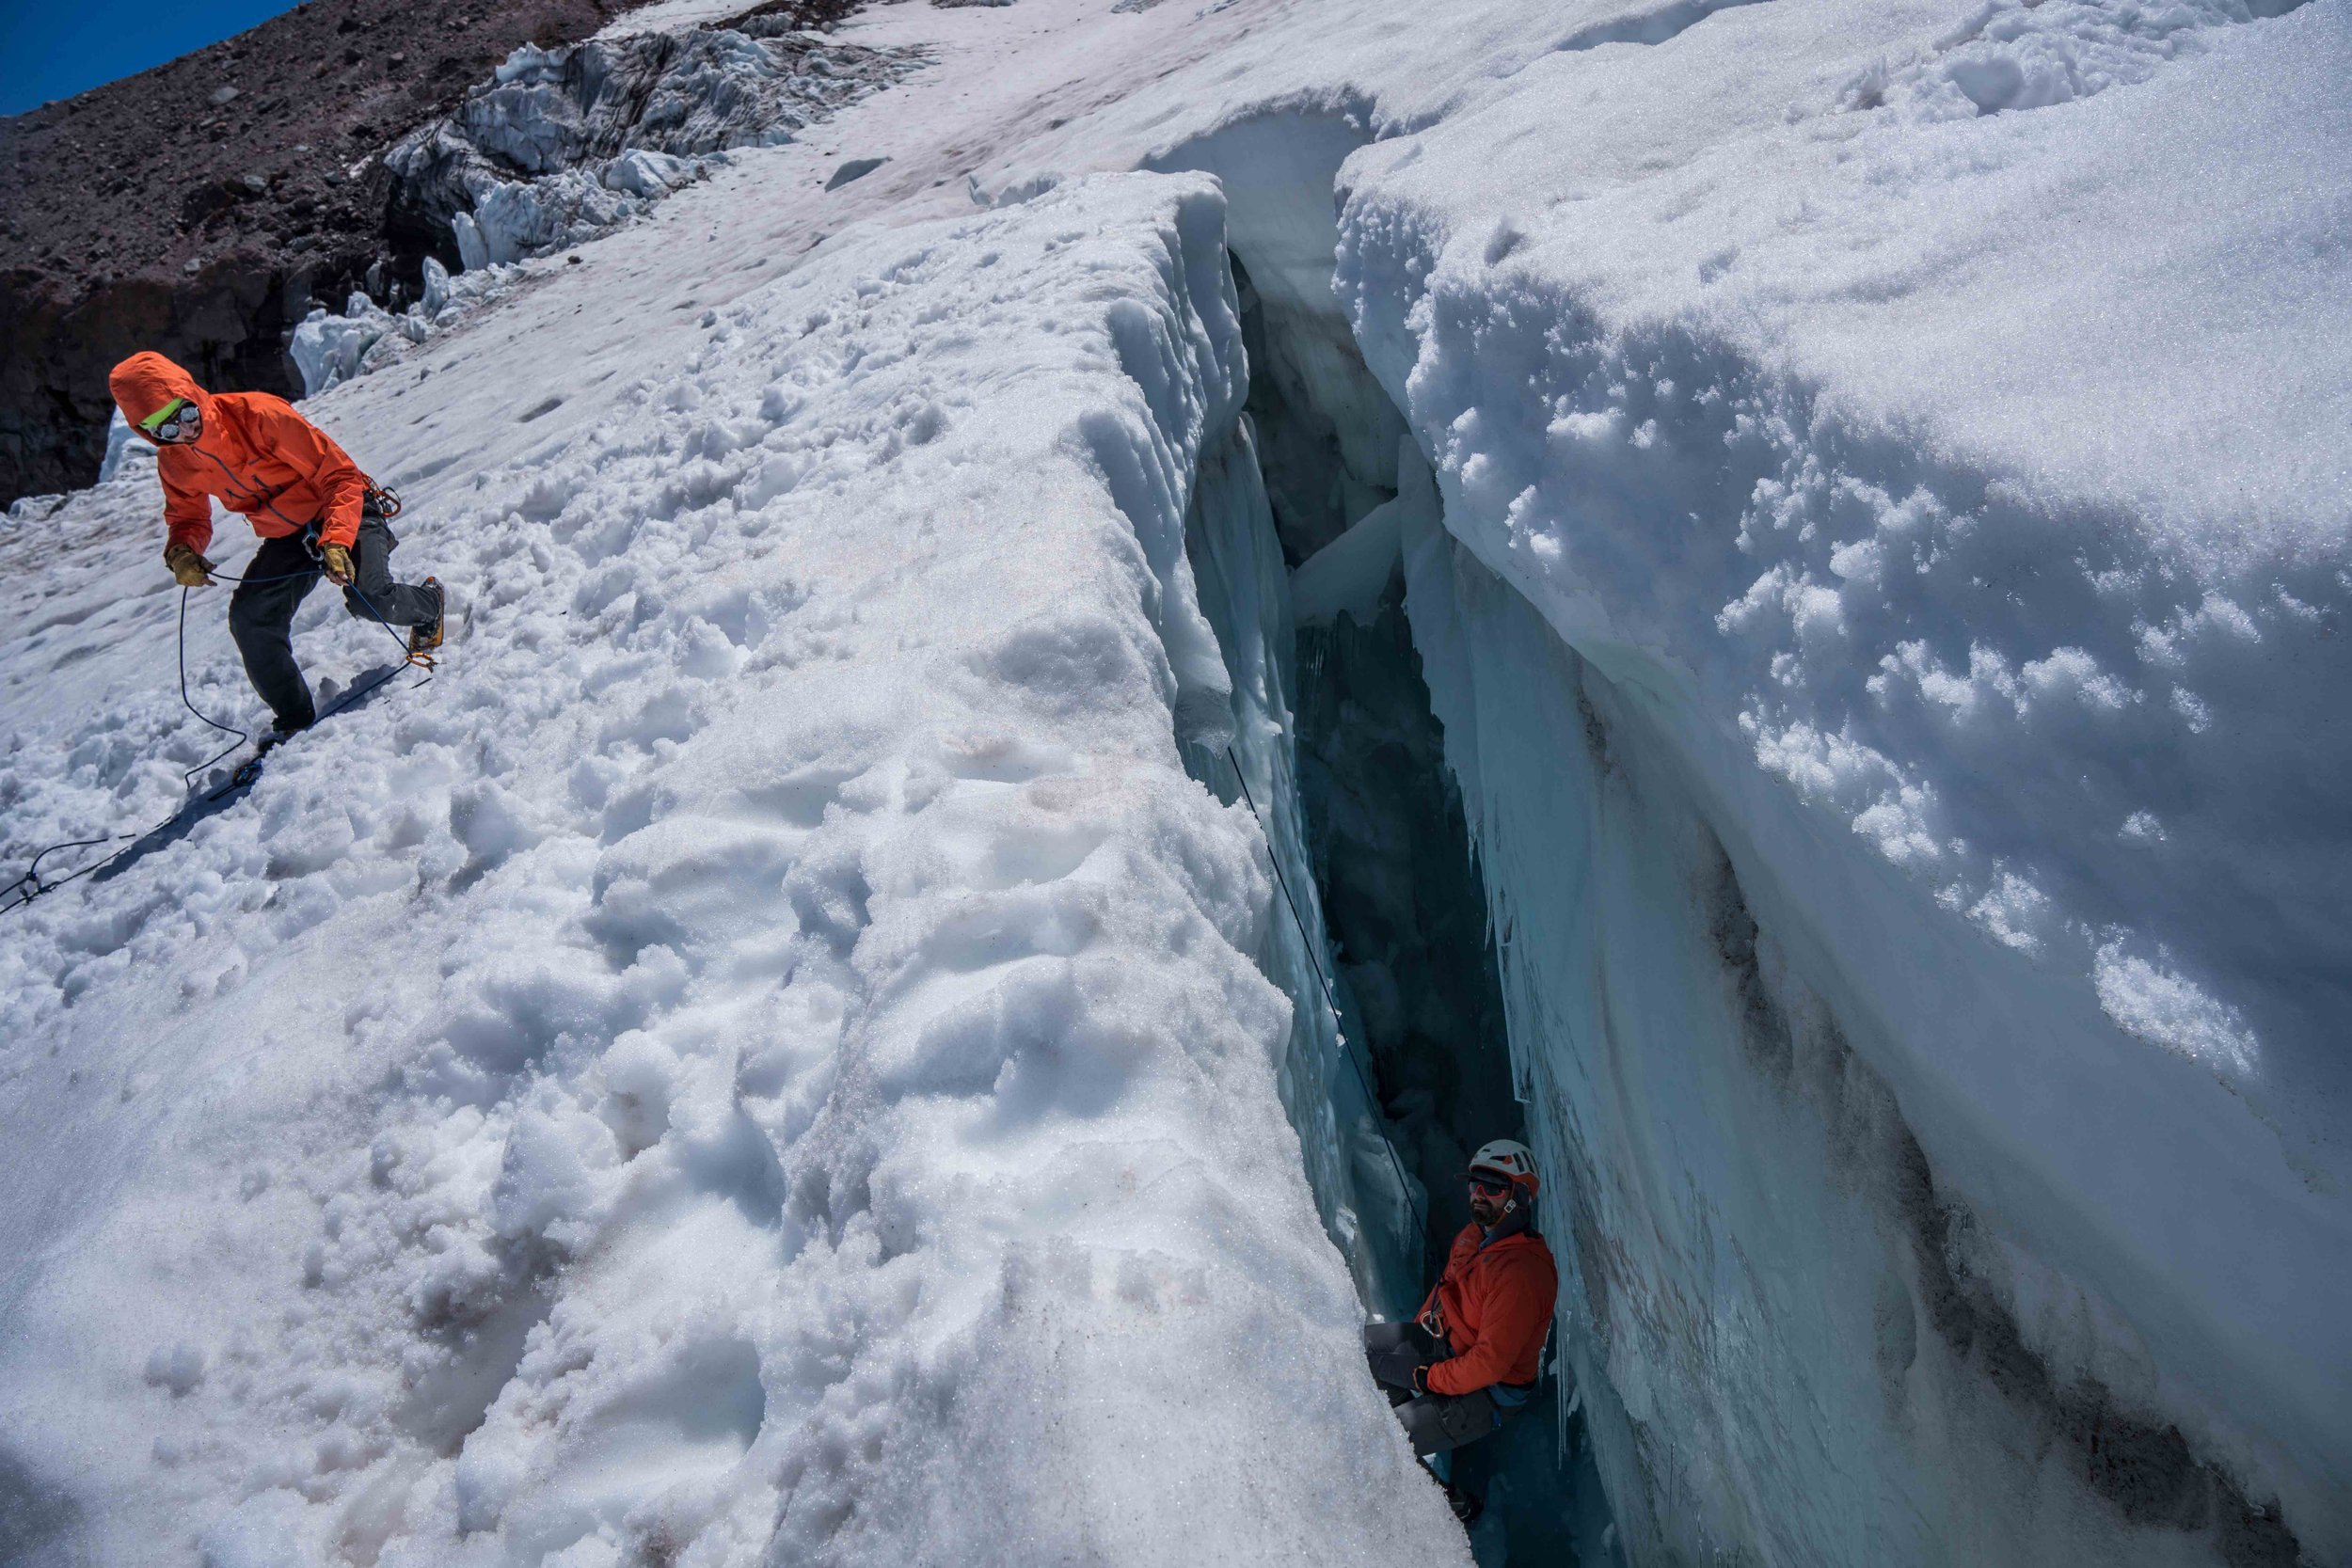 Crevasse rescue practice on Mount Shasta's Holtum Glacier